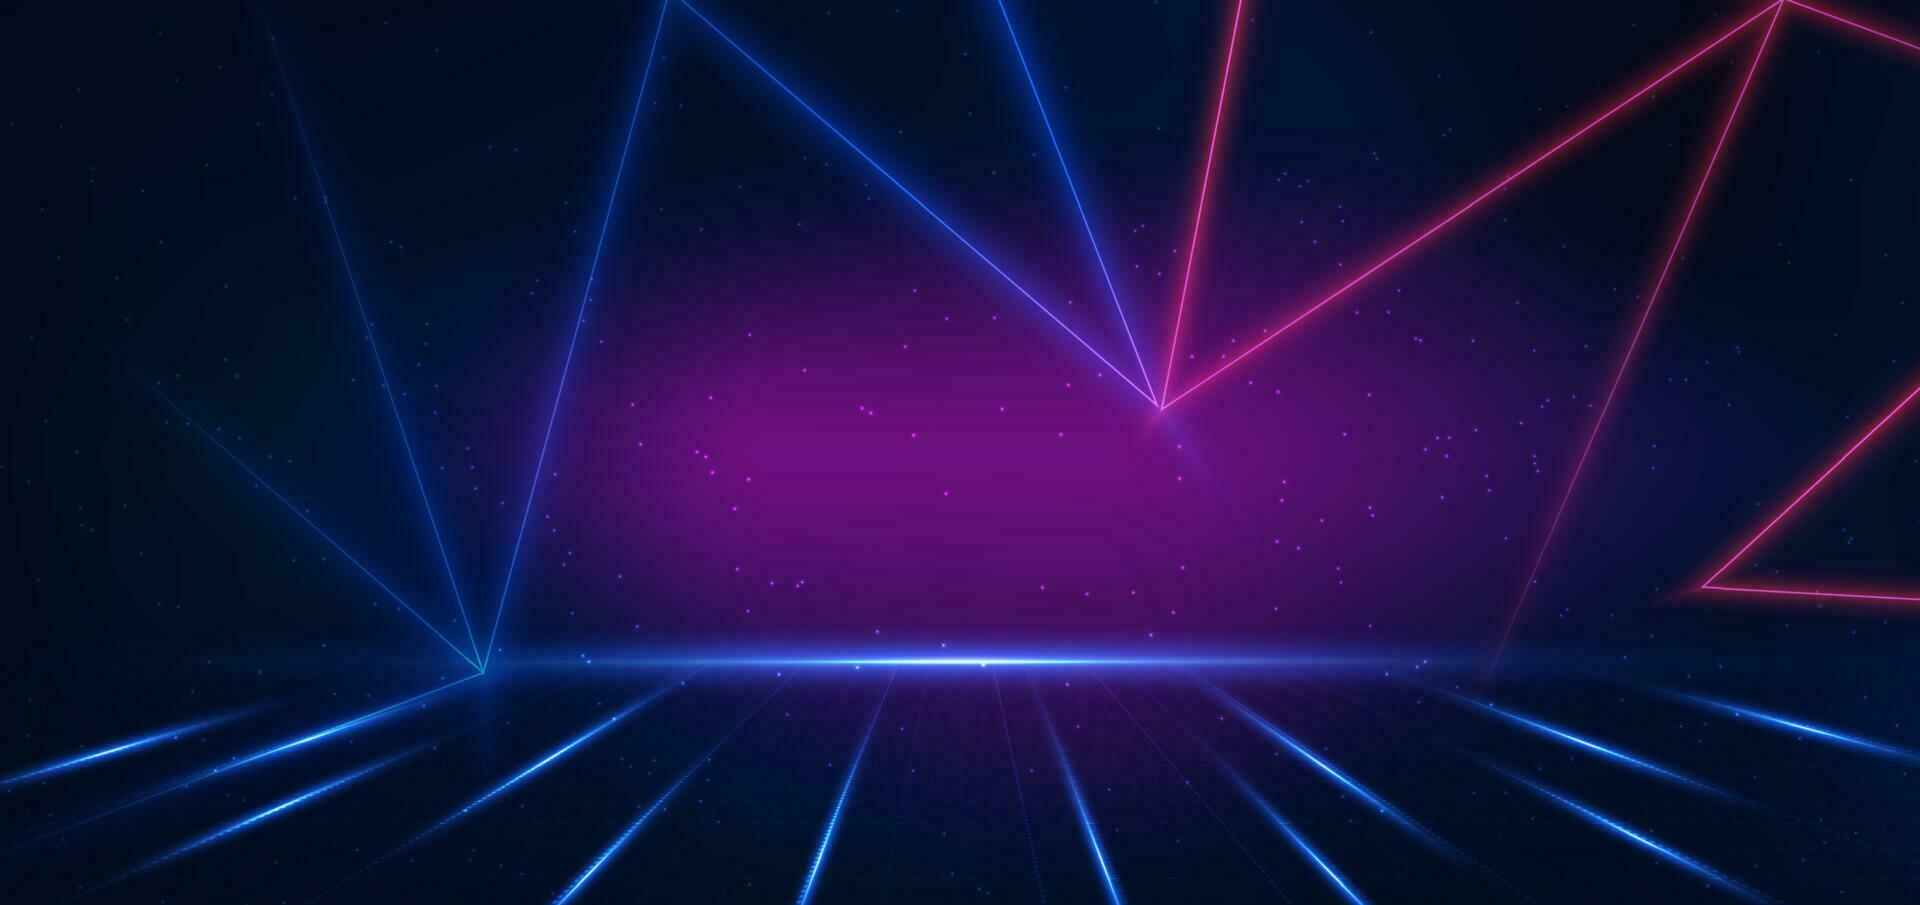 resumen tecnología futurista brillante azul y rosado ligero líneas en oscuro azul antecedentes. conexión comunicación red concepto. vector